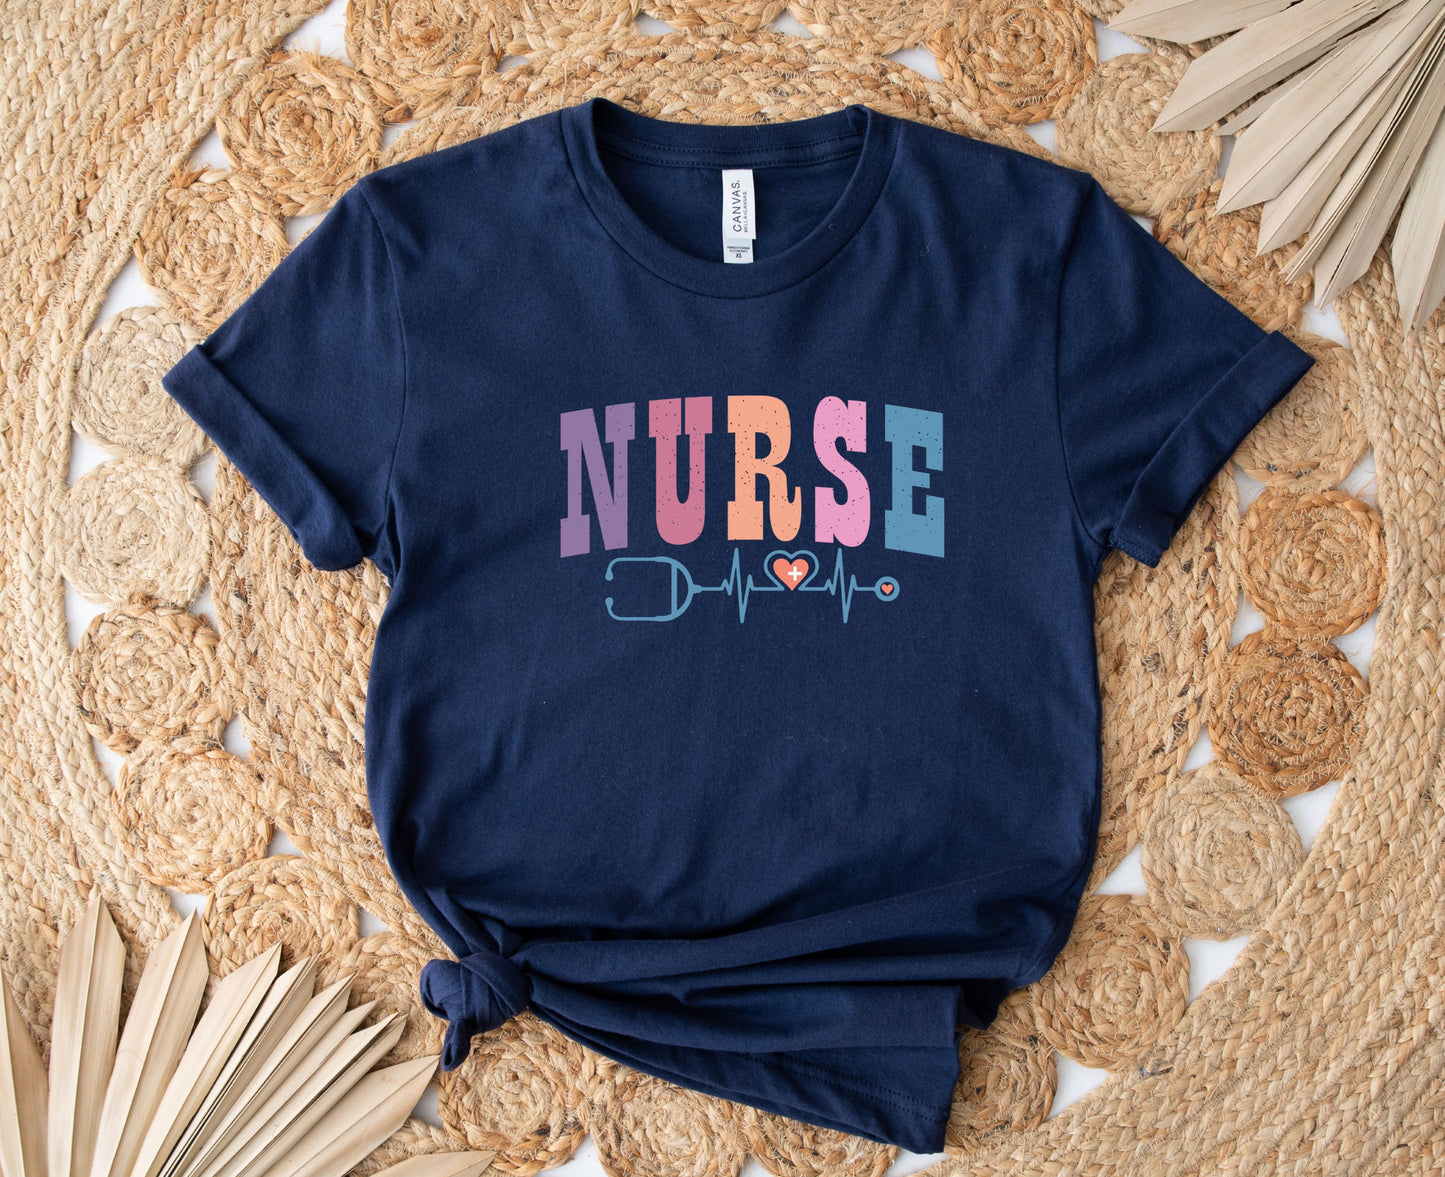 Nurse Color Font Shirt, I love nurses shirt, Awesome gift shirt for nurses, gift shirt for a special nurse, Thank you gift shirt for nurses